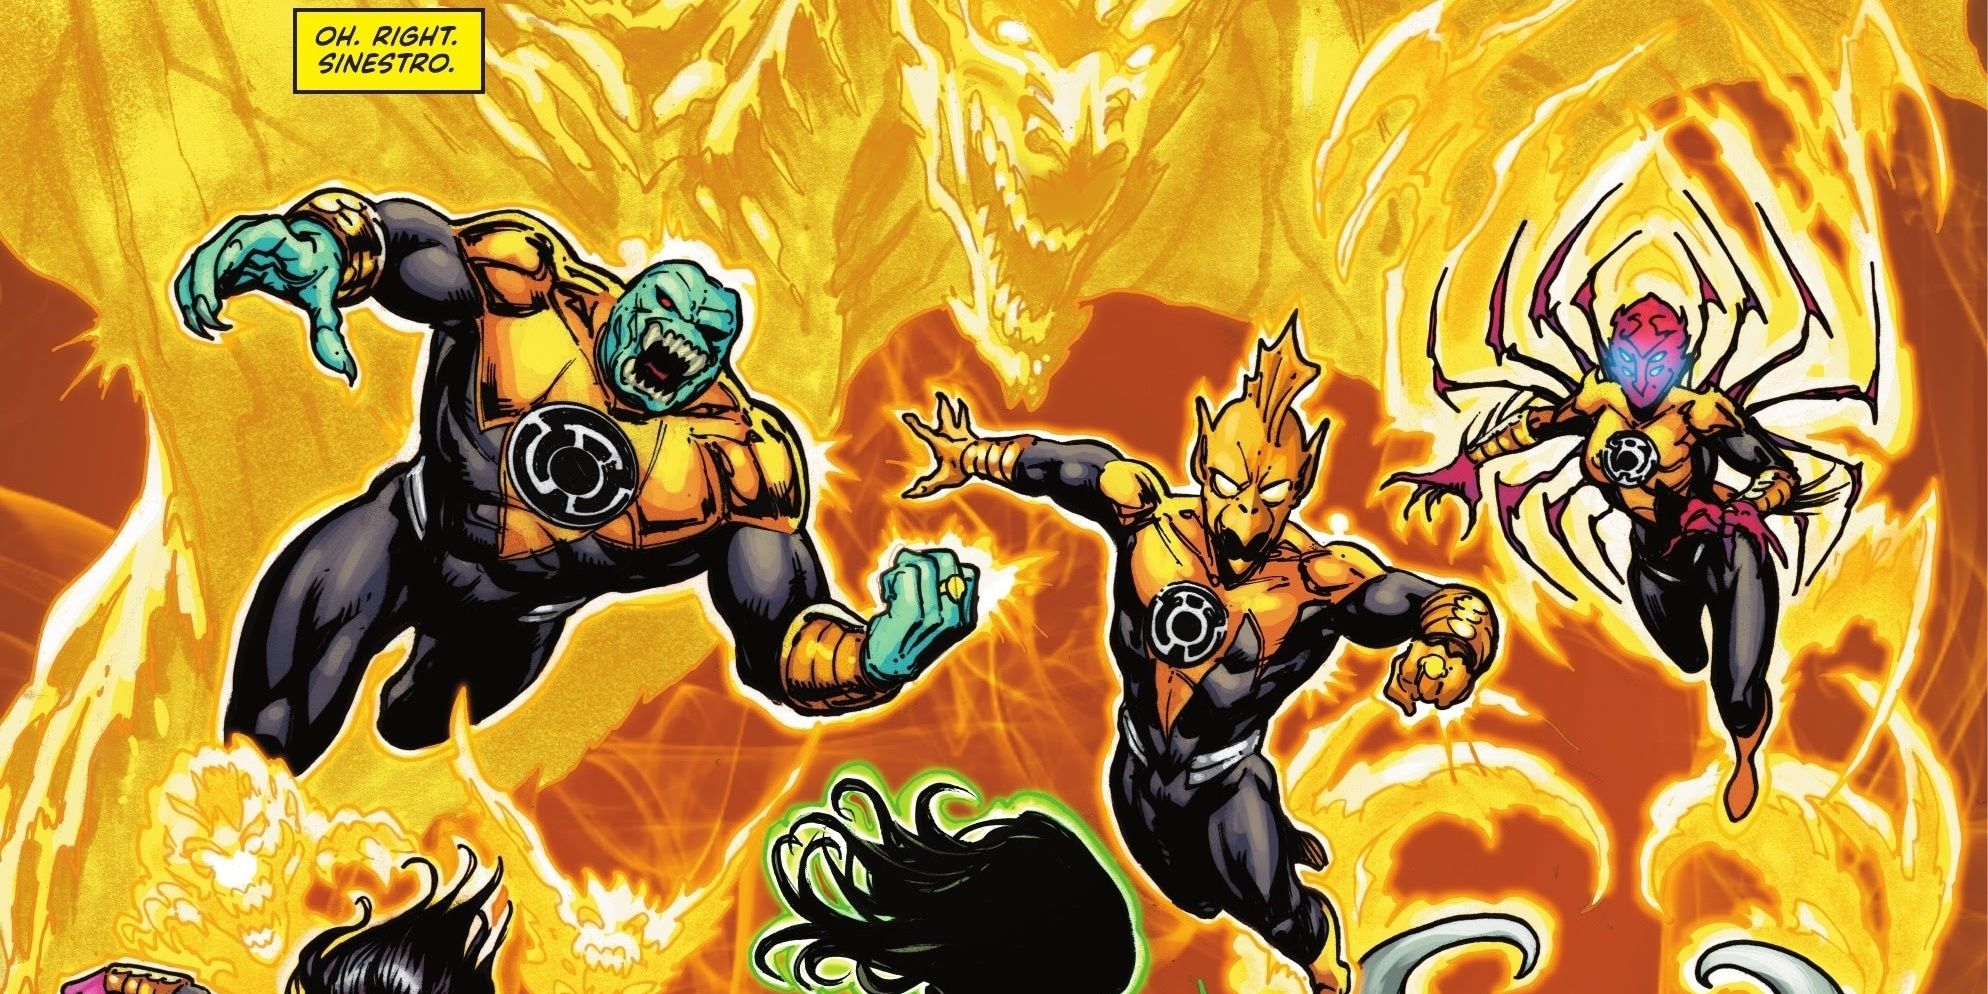 The Yellow Lantern Corps attacks in DC Comics